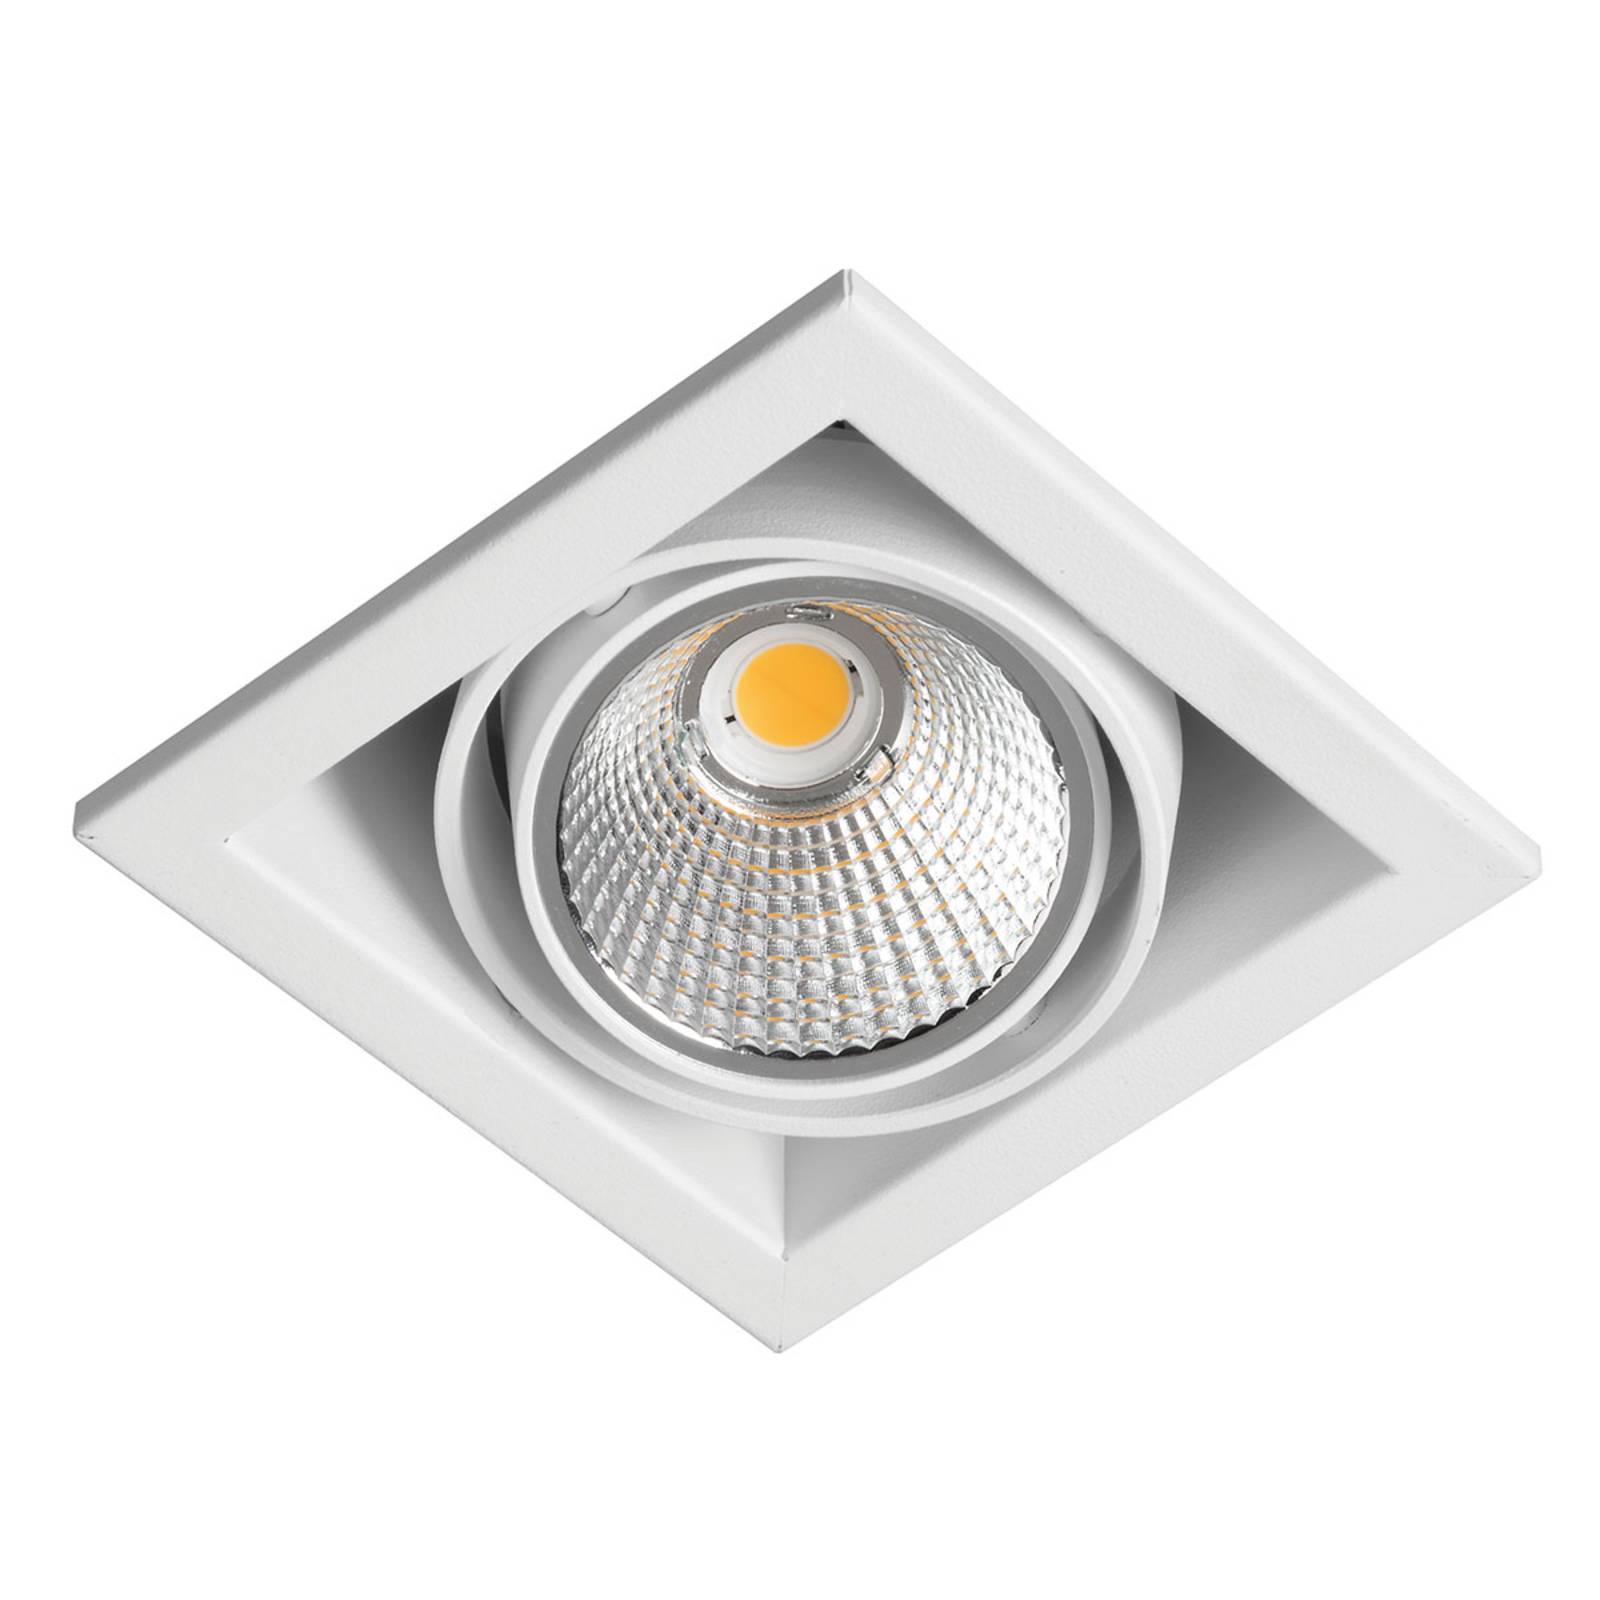 Zipar Uno Recessed LED downlight 12 W, 3,000 K